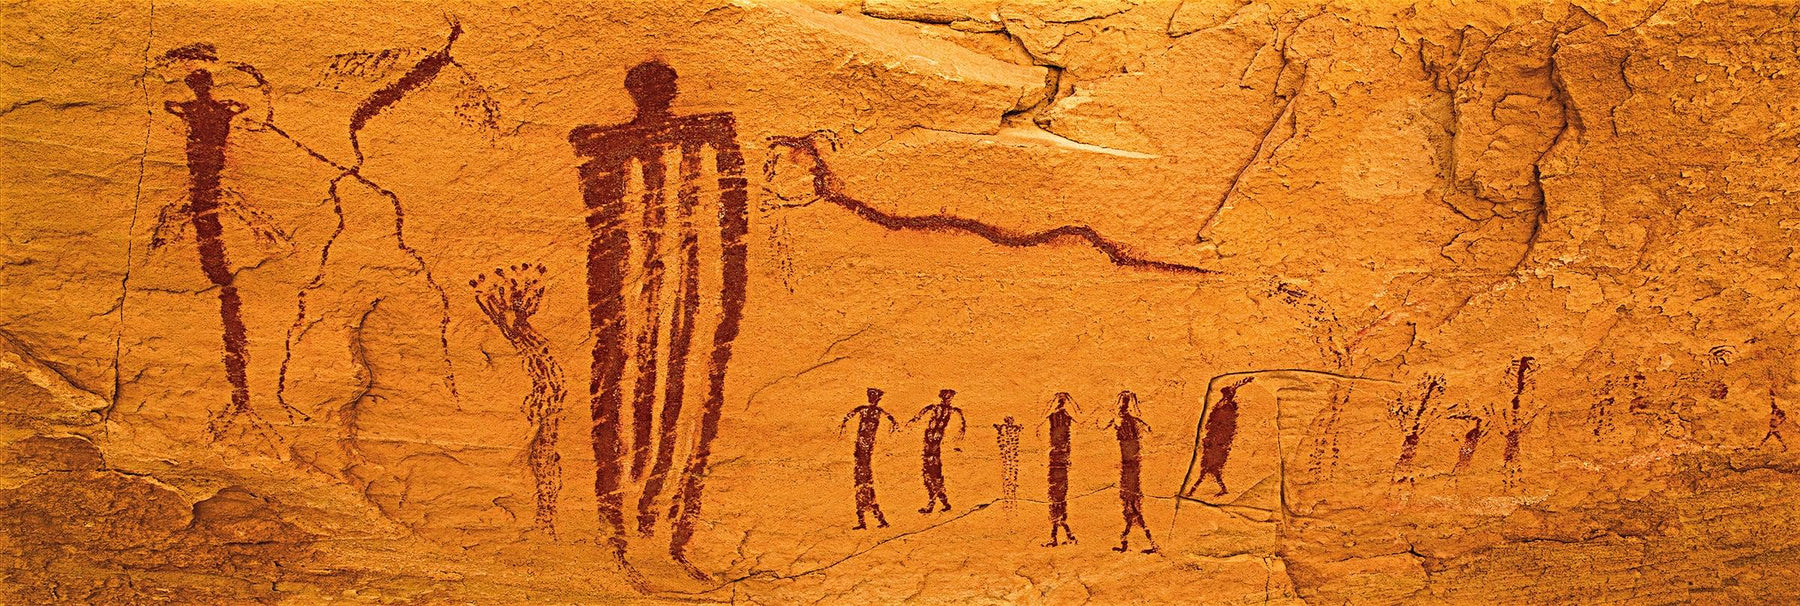 Ancient paintings on the orange rock wall of Goblin Valley Utah